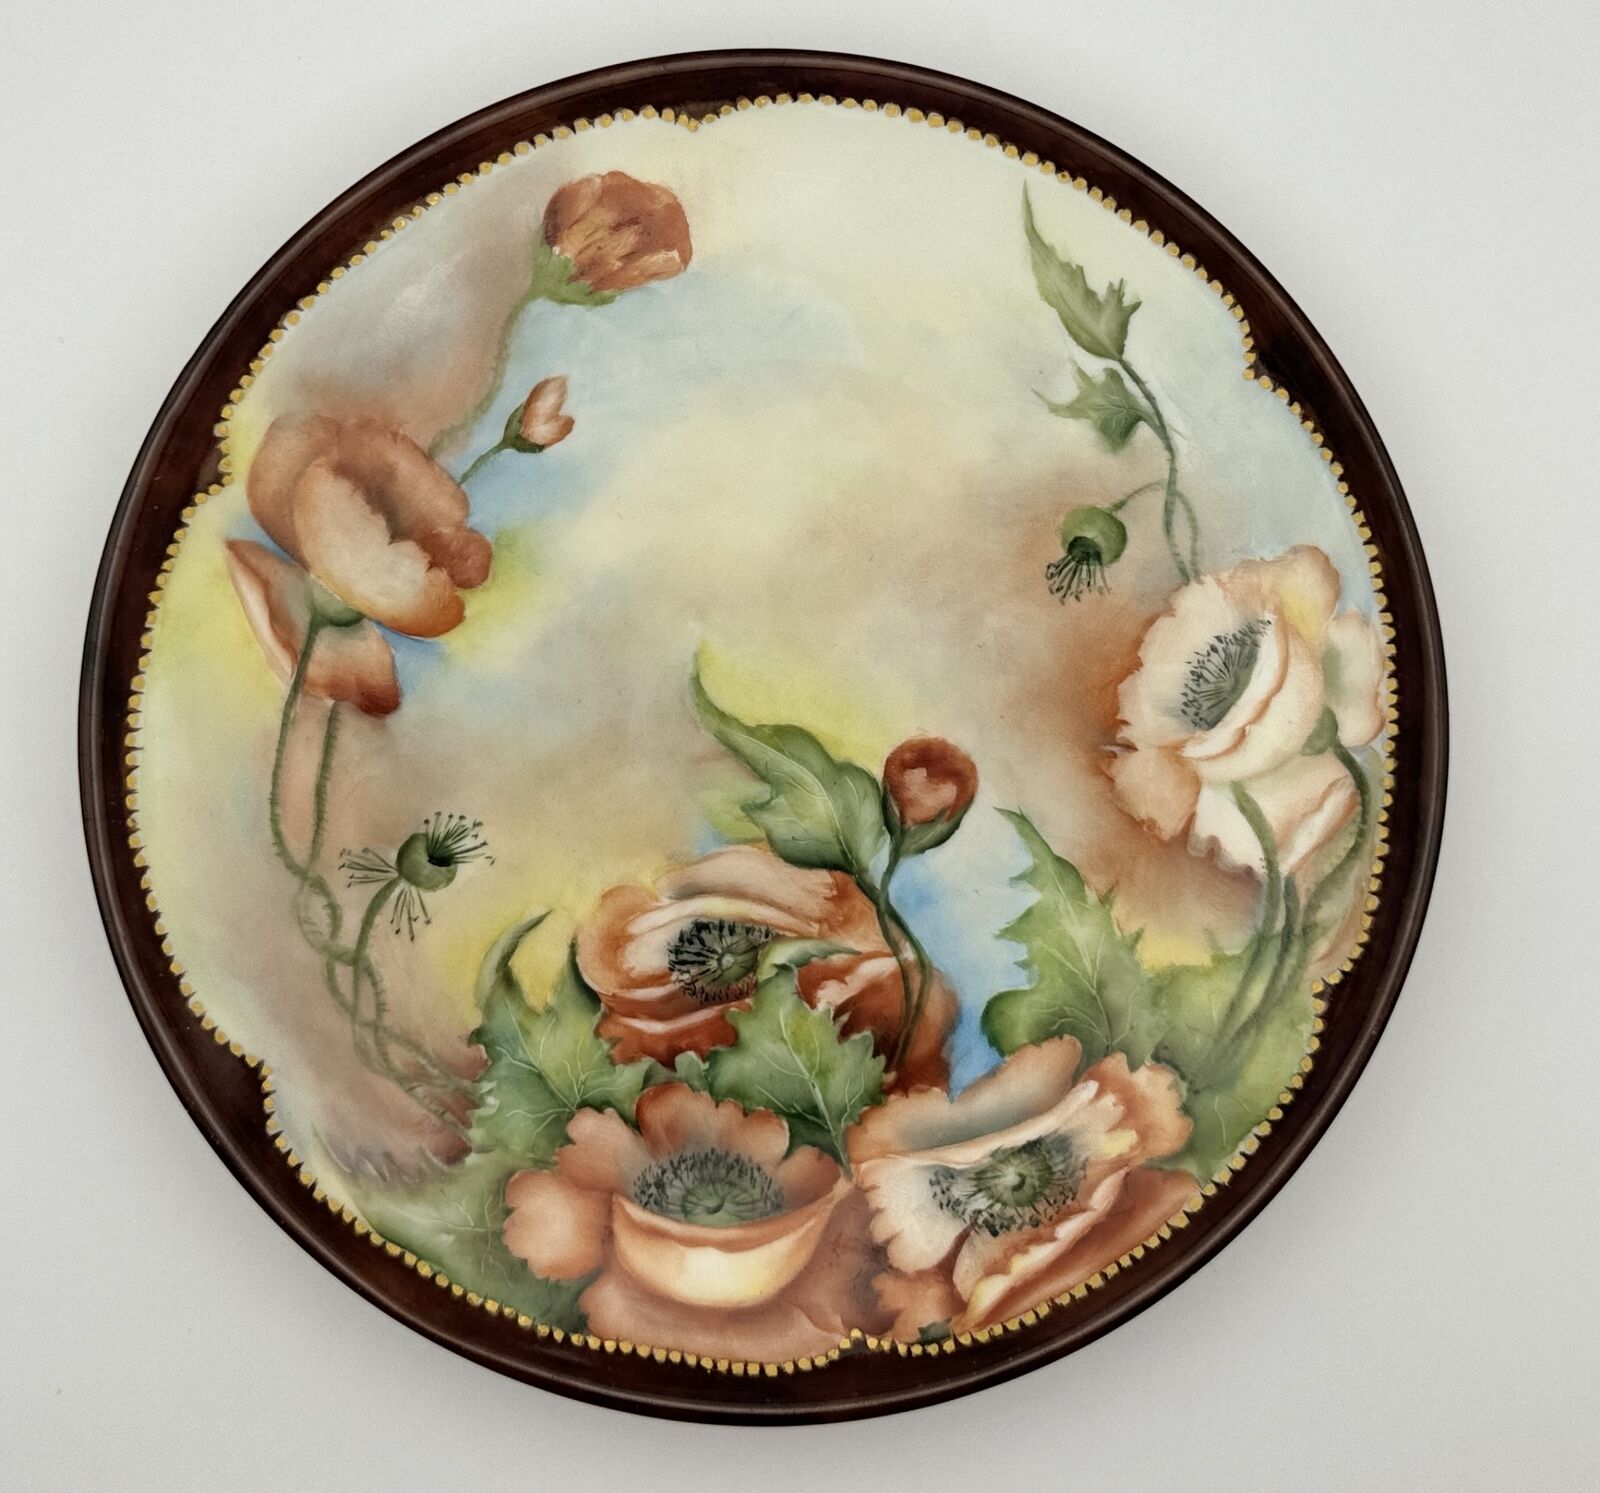 J.P. L Limoges. France Hand-Painted Porcelain Plate with Floral Design